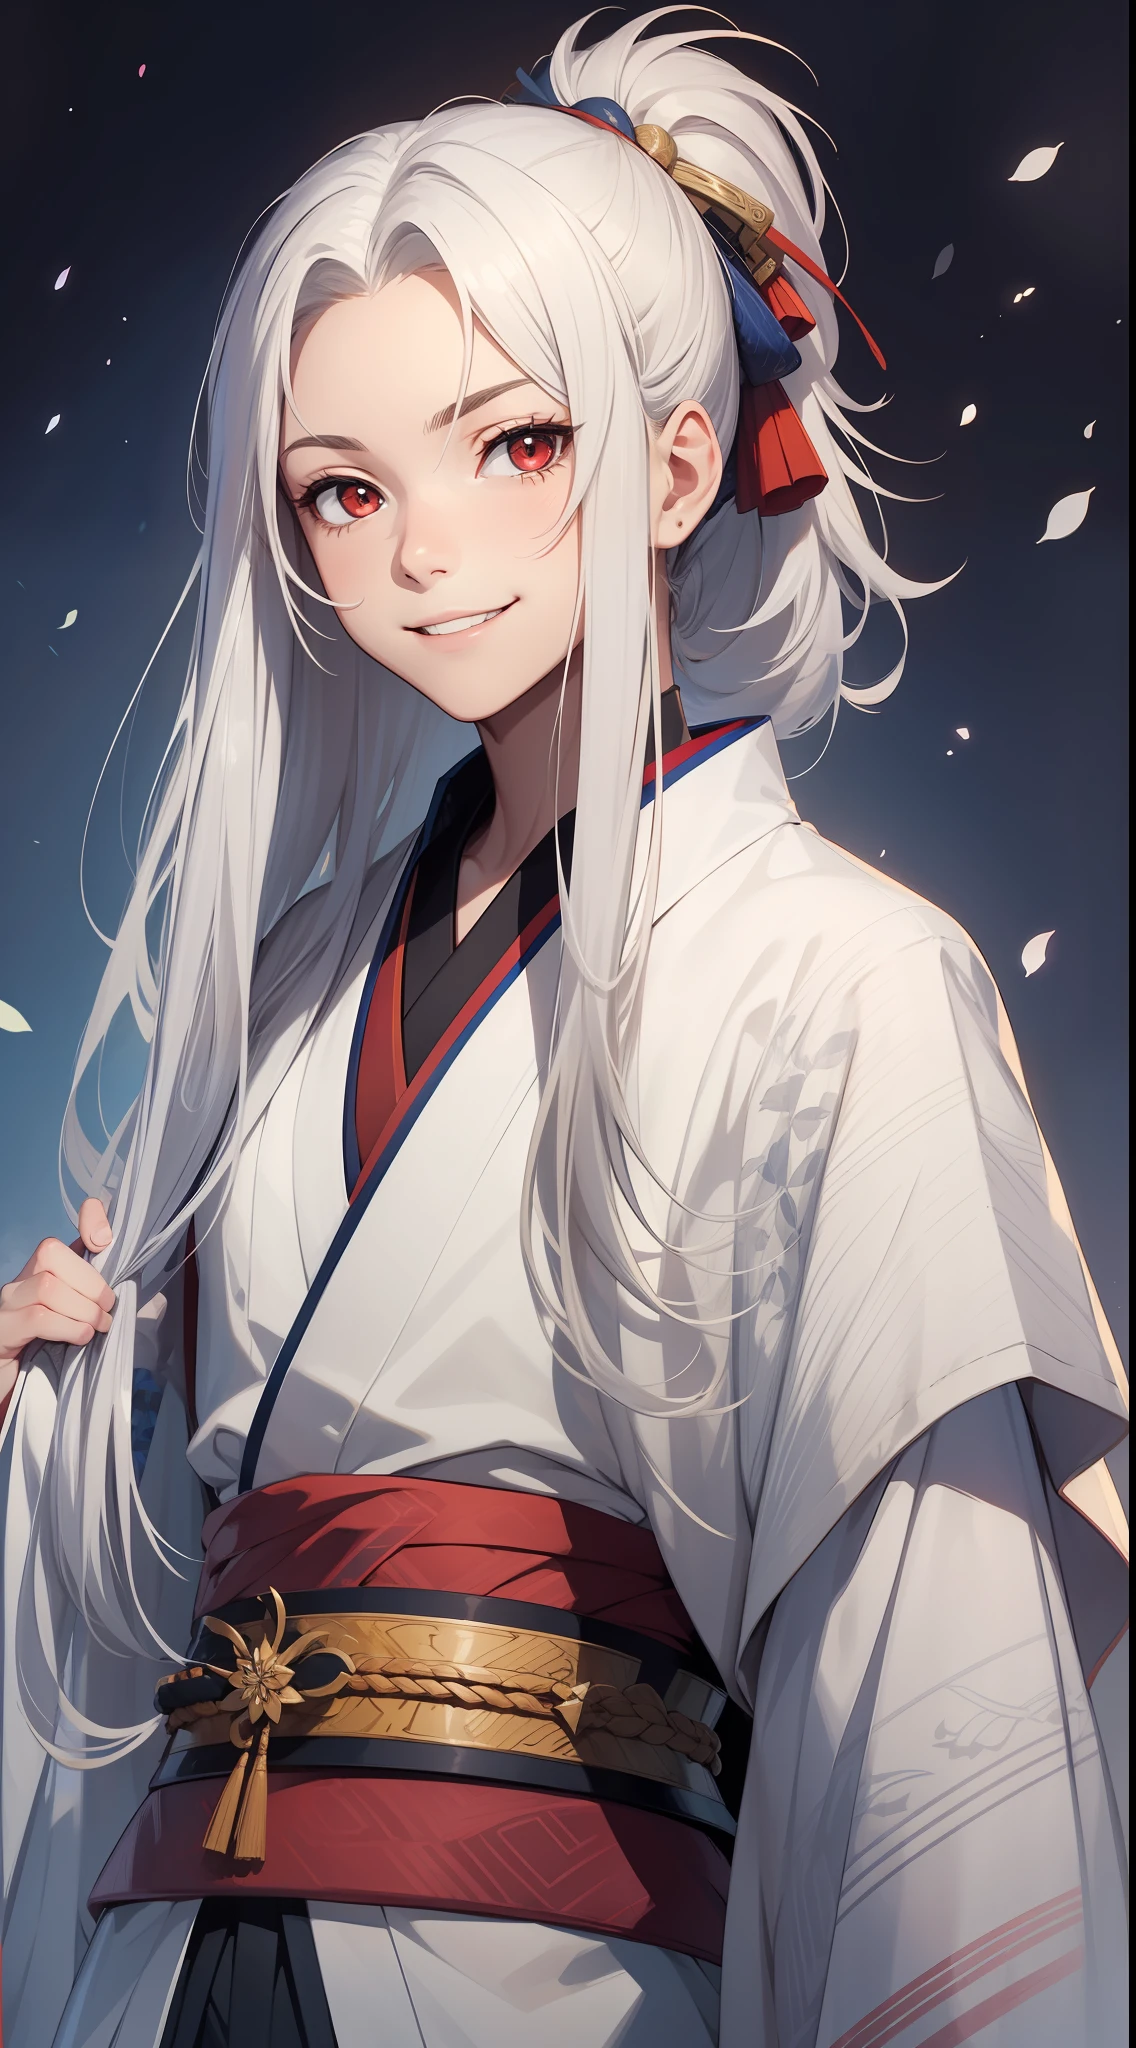 Young guy, long white hair, high ponytail, red eyes, blue sleeveless samurai kimono, smile, masterpiece, high quality